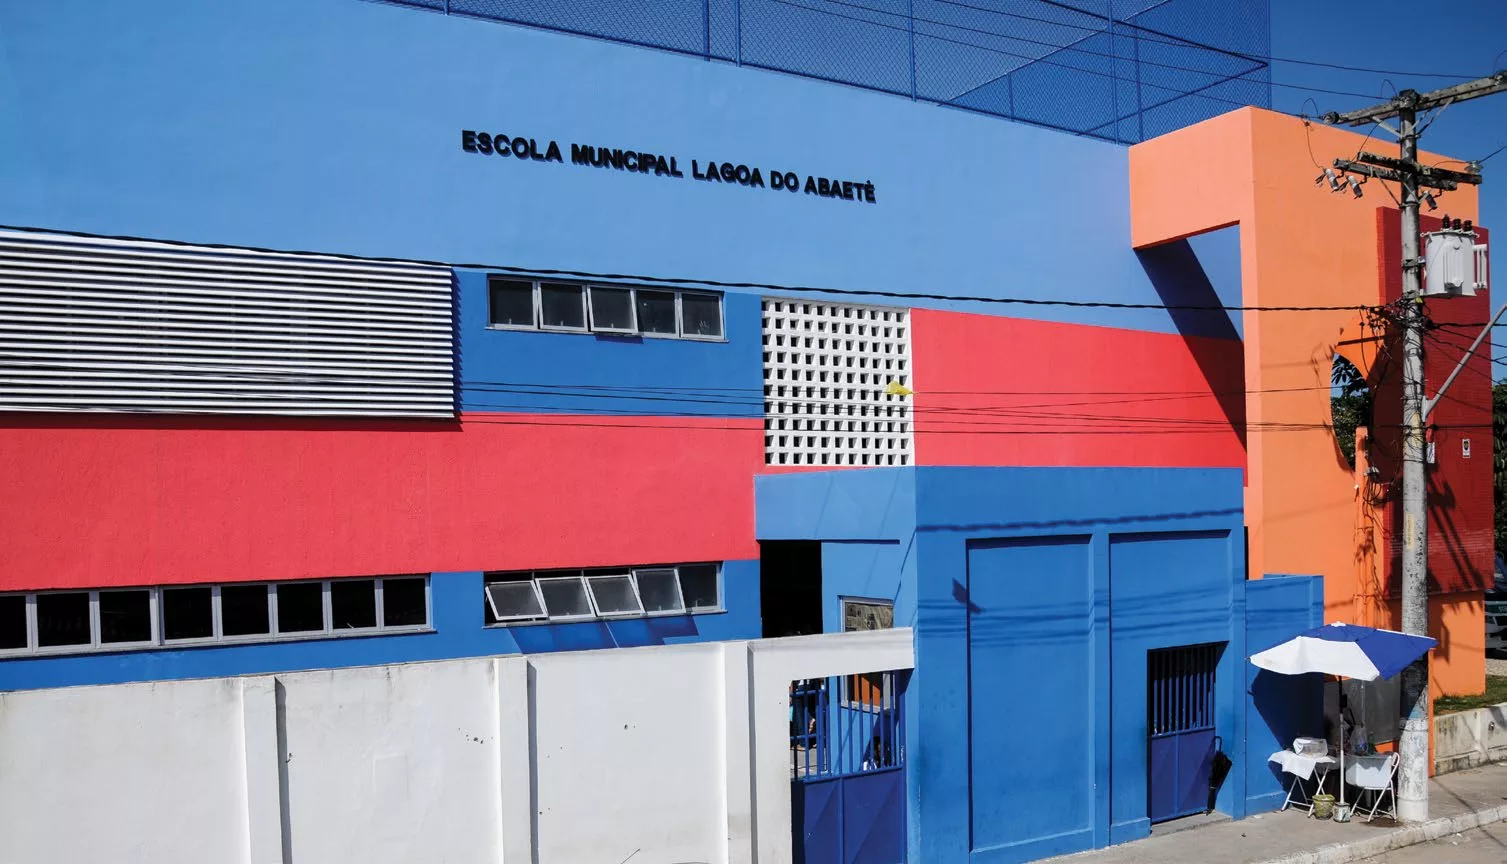 Escola Municipal Lagoa do Abaeté